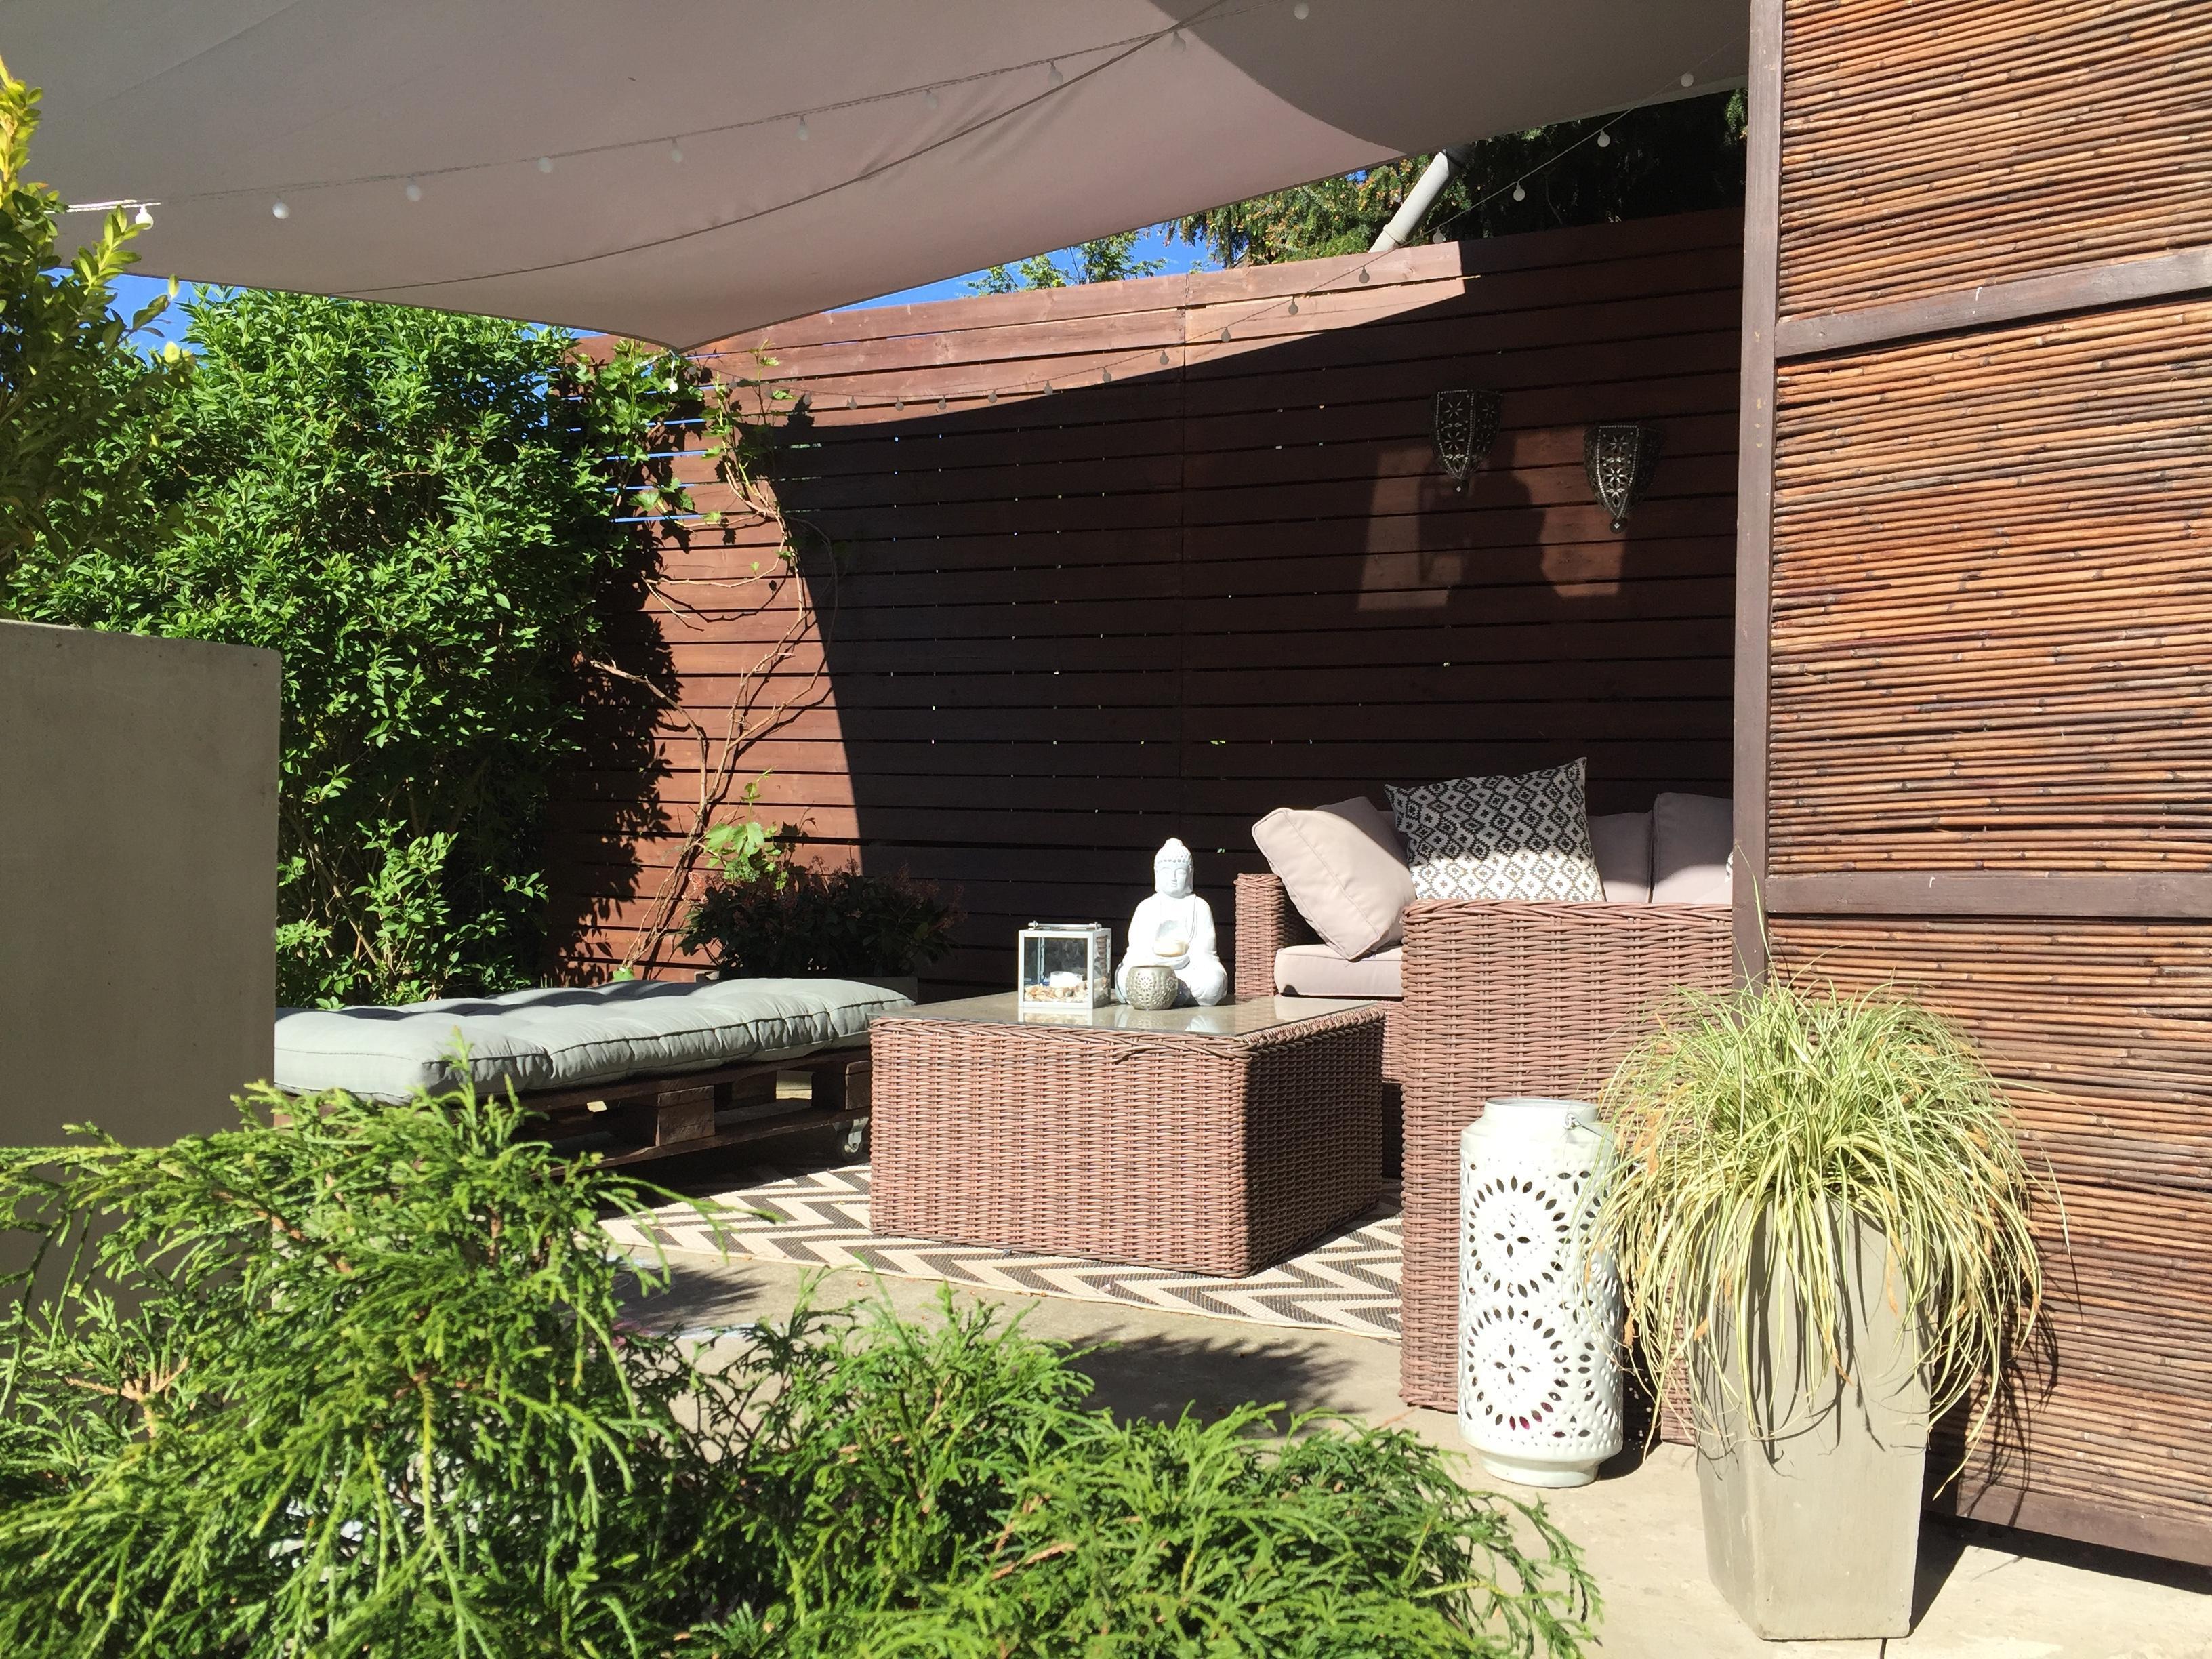 #my_home_today #garden #gardenlounge #garten #patio #gartenliebe #bohoscandi #bohointerieur